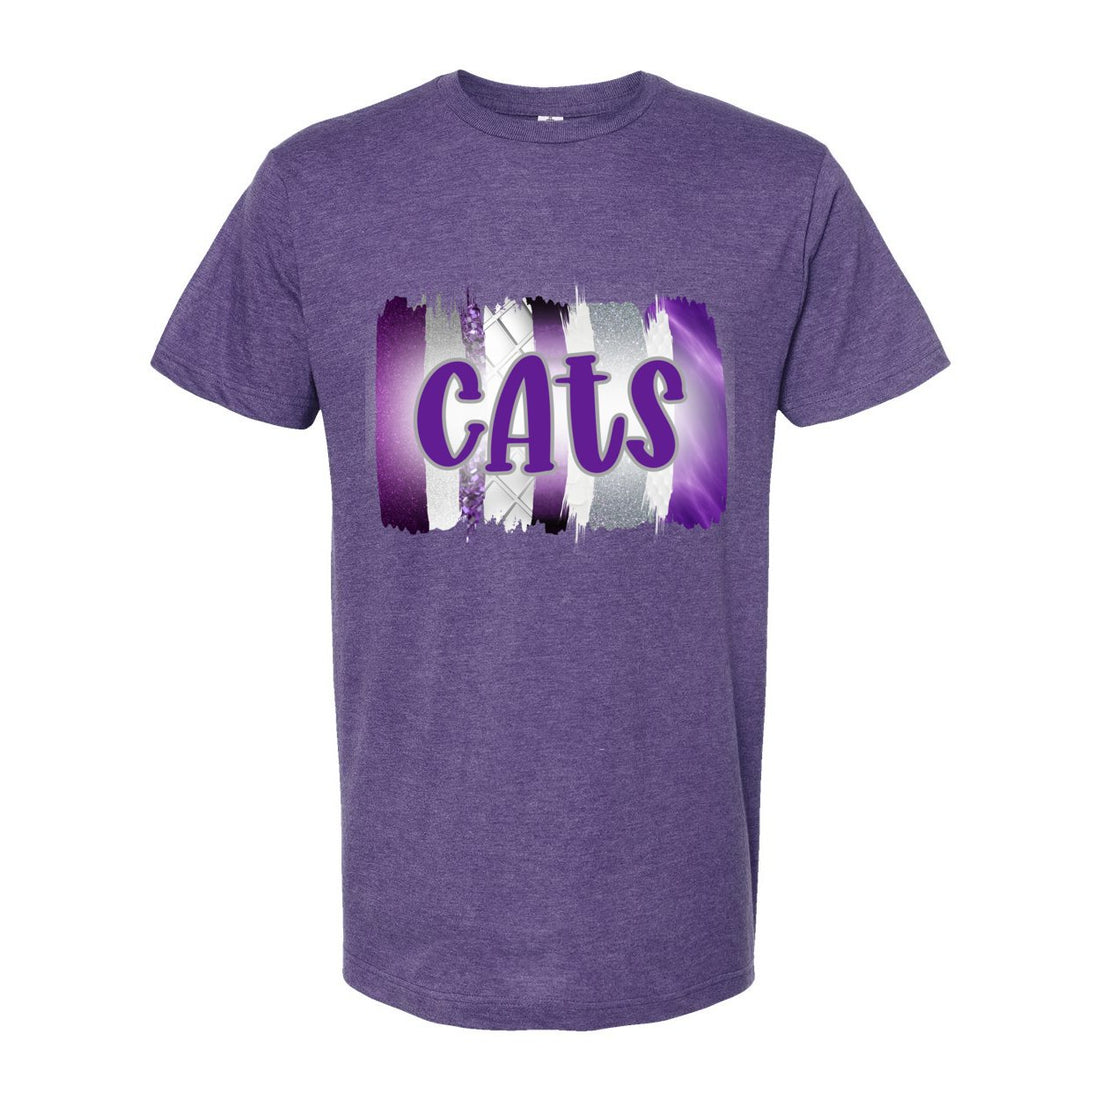 Cats Paint Swipe Unisex Fine Jersey T-Shirt - T-Shirts - Positively Sassy - Cats Paint Swipe Unisex Fine Jersey T-Shirt